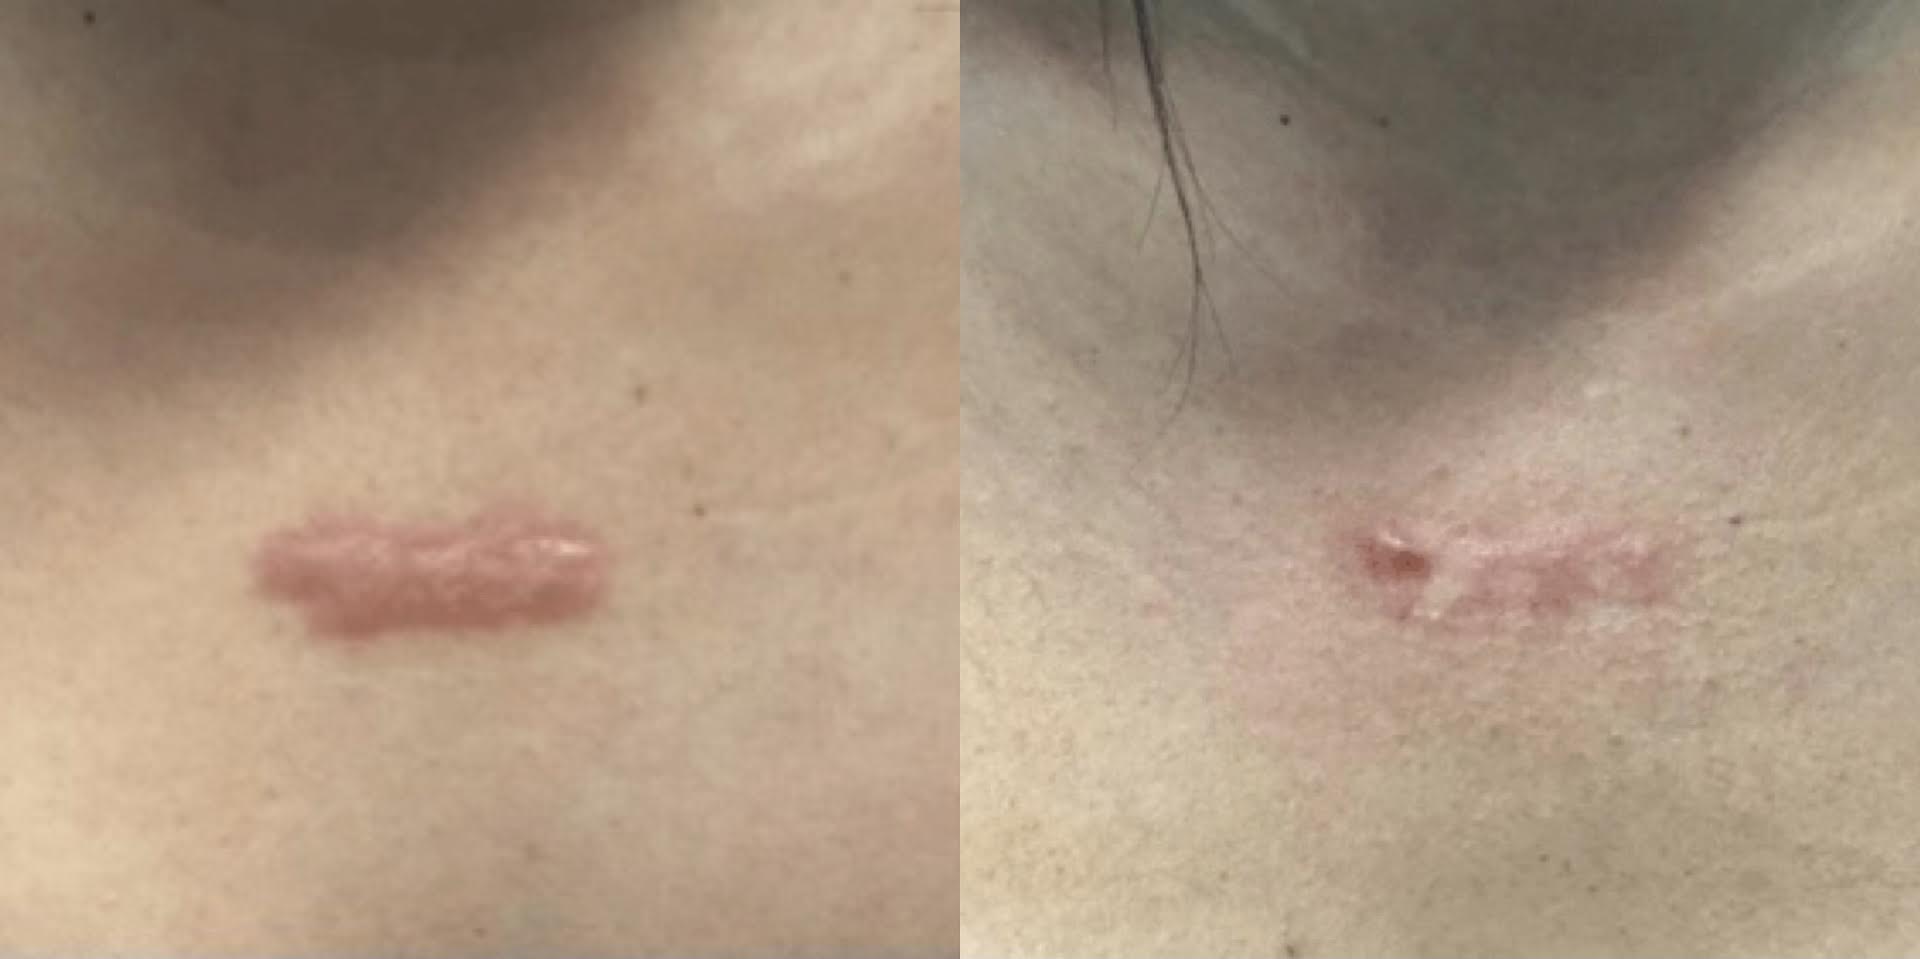 Dermatologist Cincinnati Dr Porras Skin Diagnostics Laser And Rejuvenation